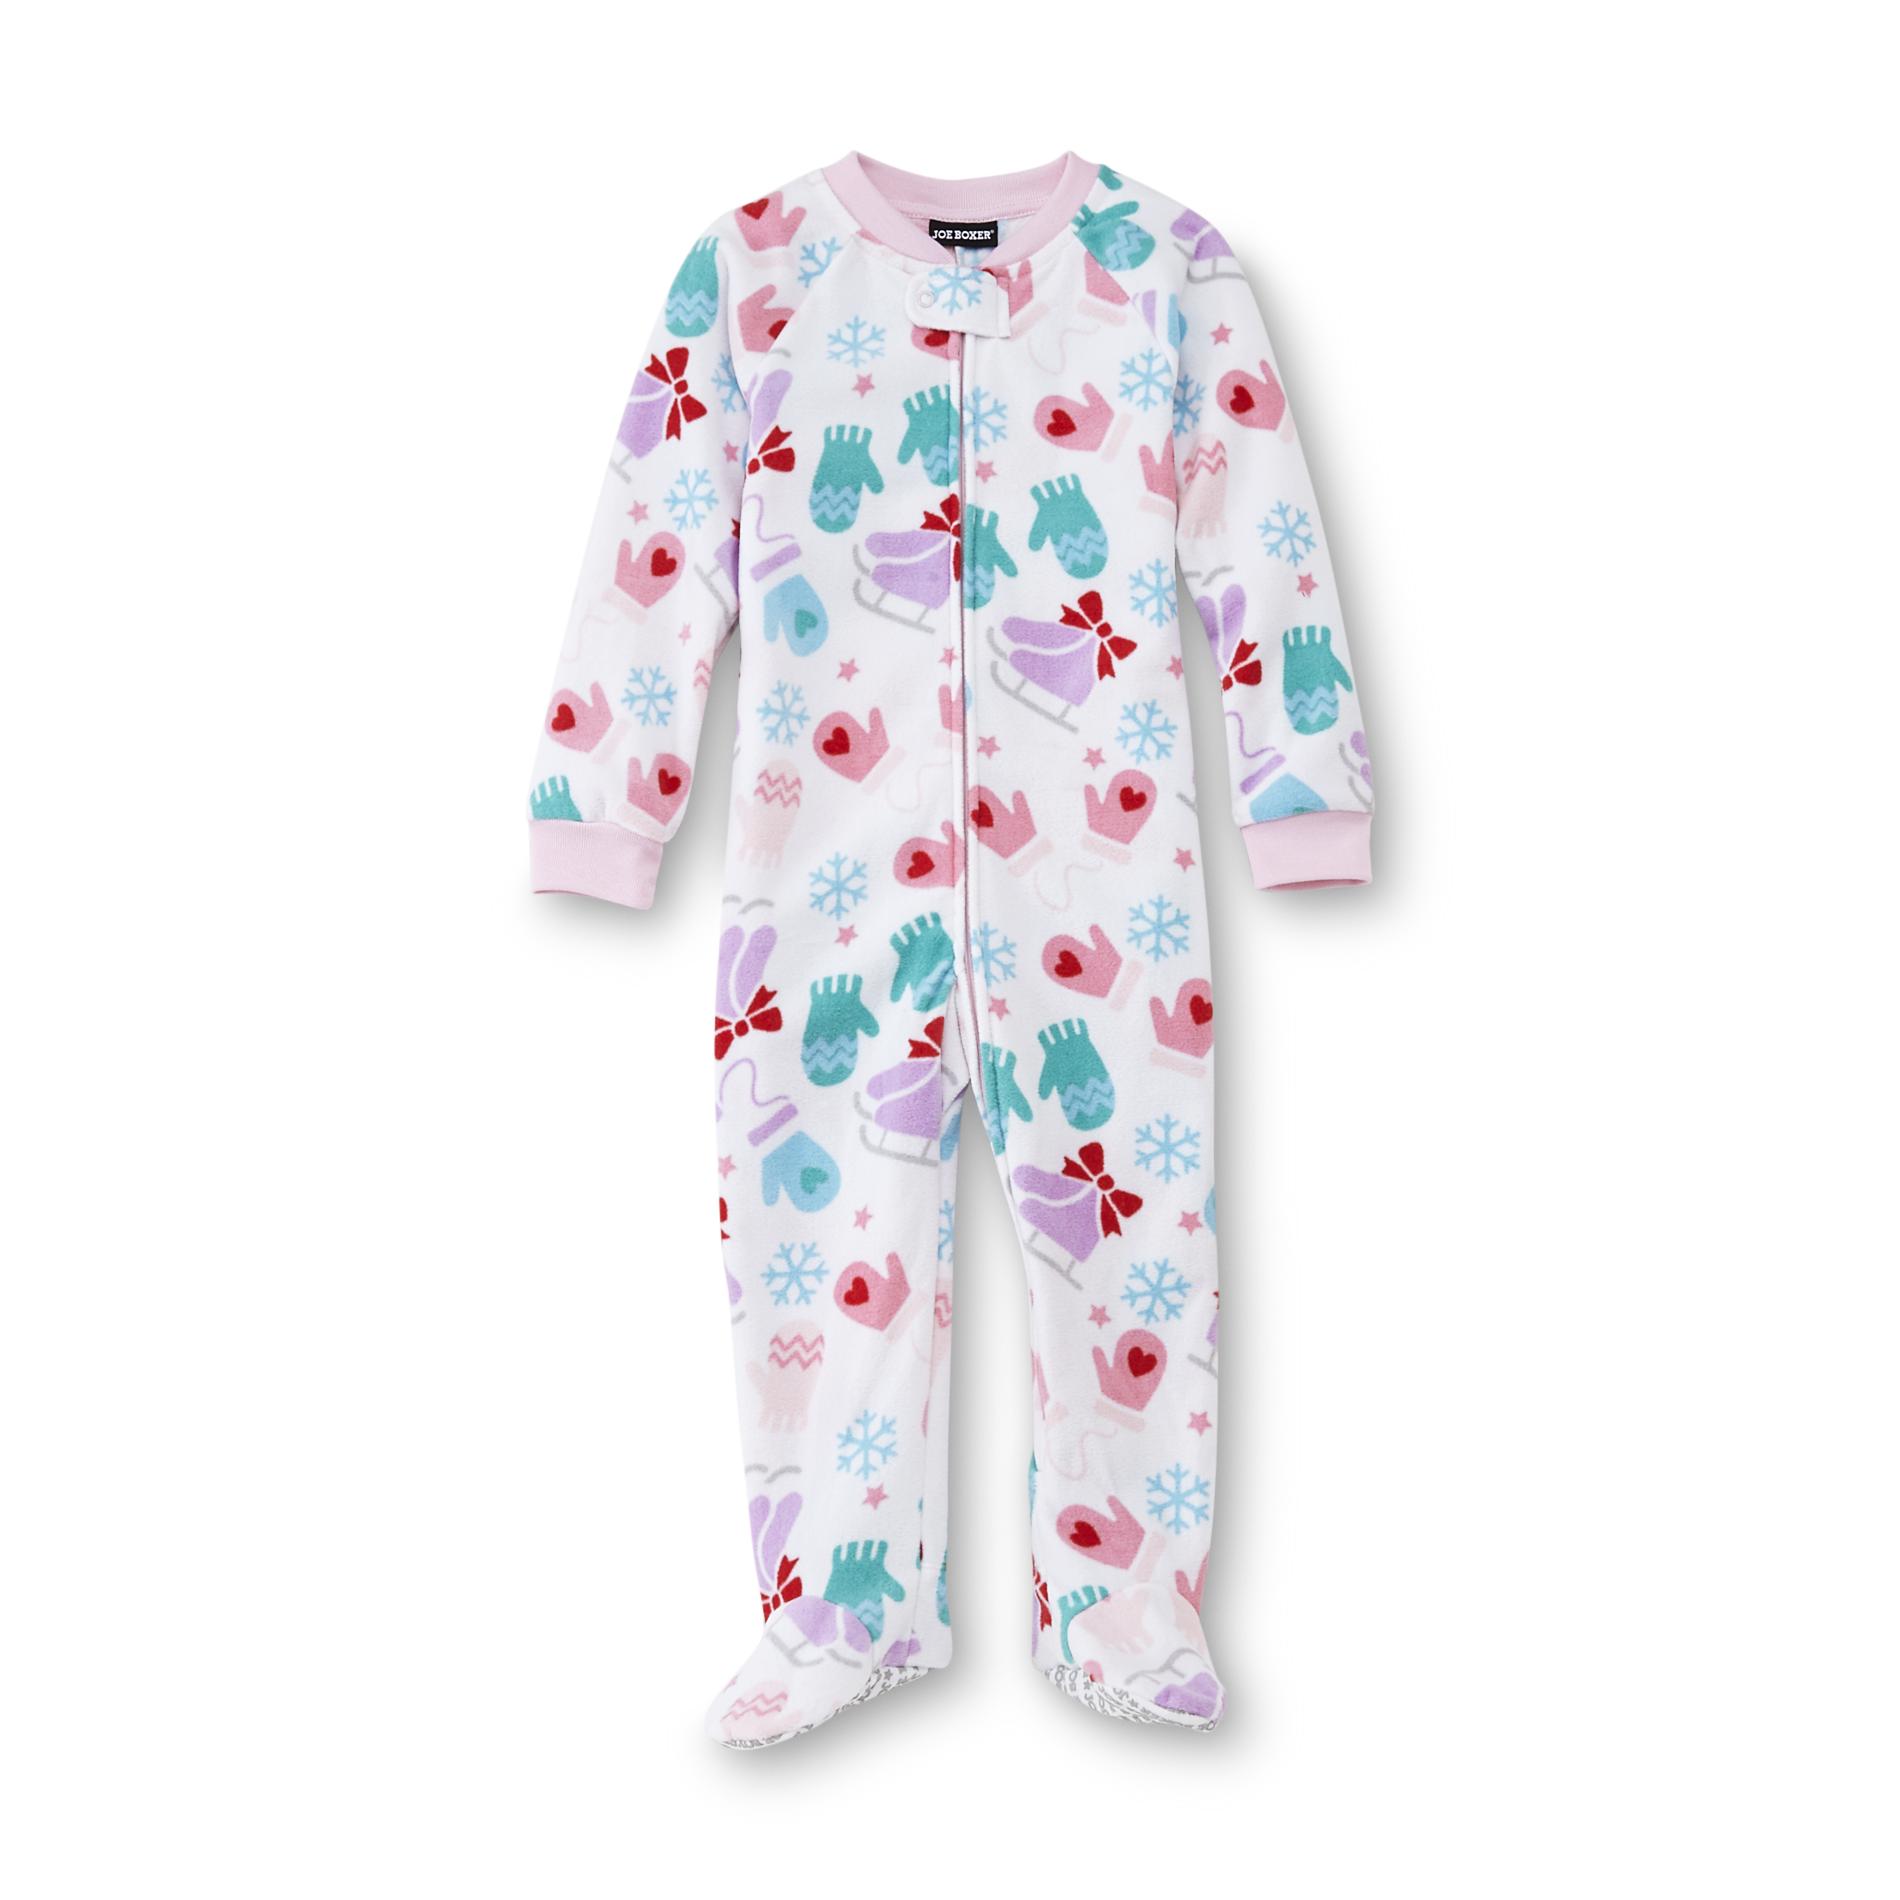 Joe Boxer Infant & Toddler Girl's Fleece Footed Pajamas - Snowflakes